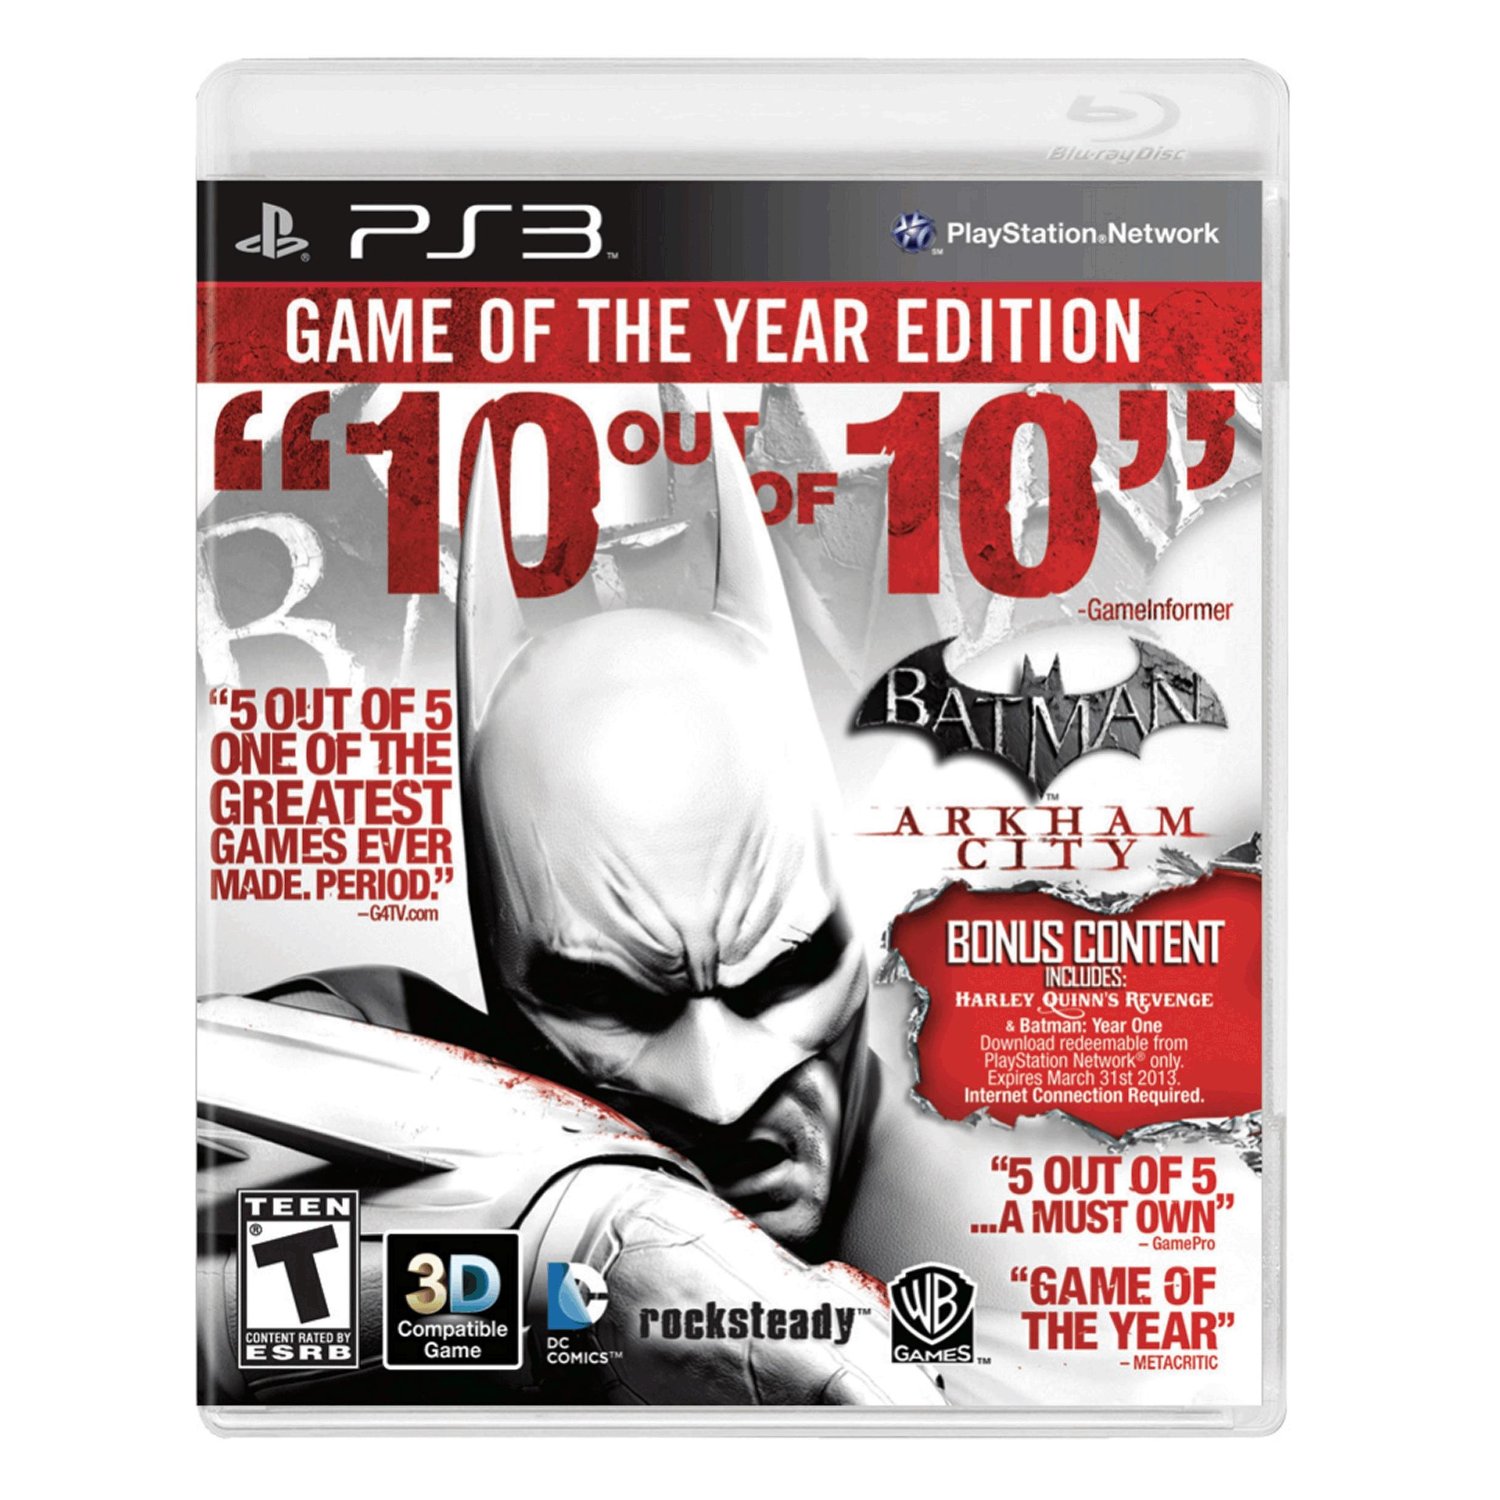 Batman: Arkham City GOTY, WHV Games, PlayStation 3, 883929240708